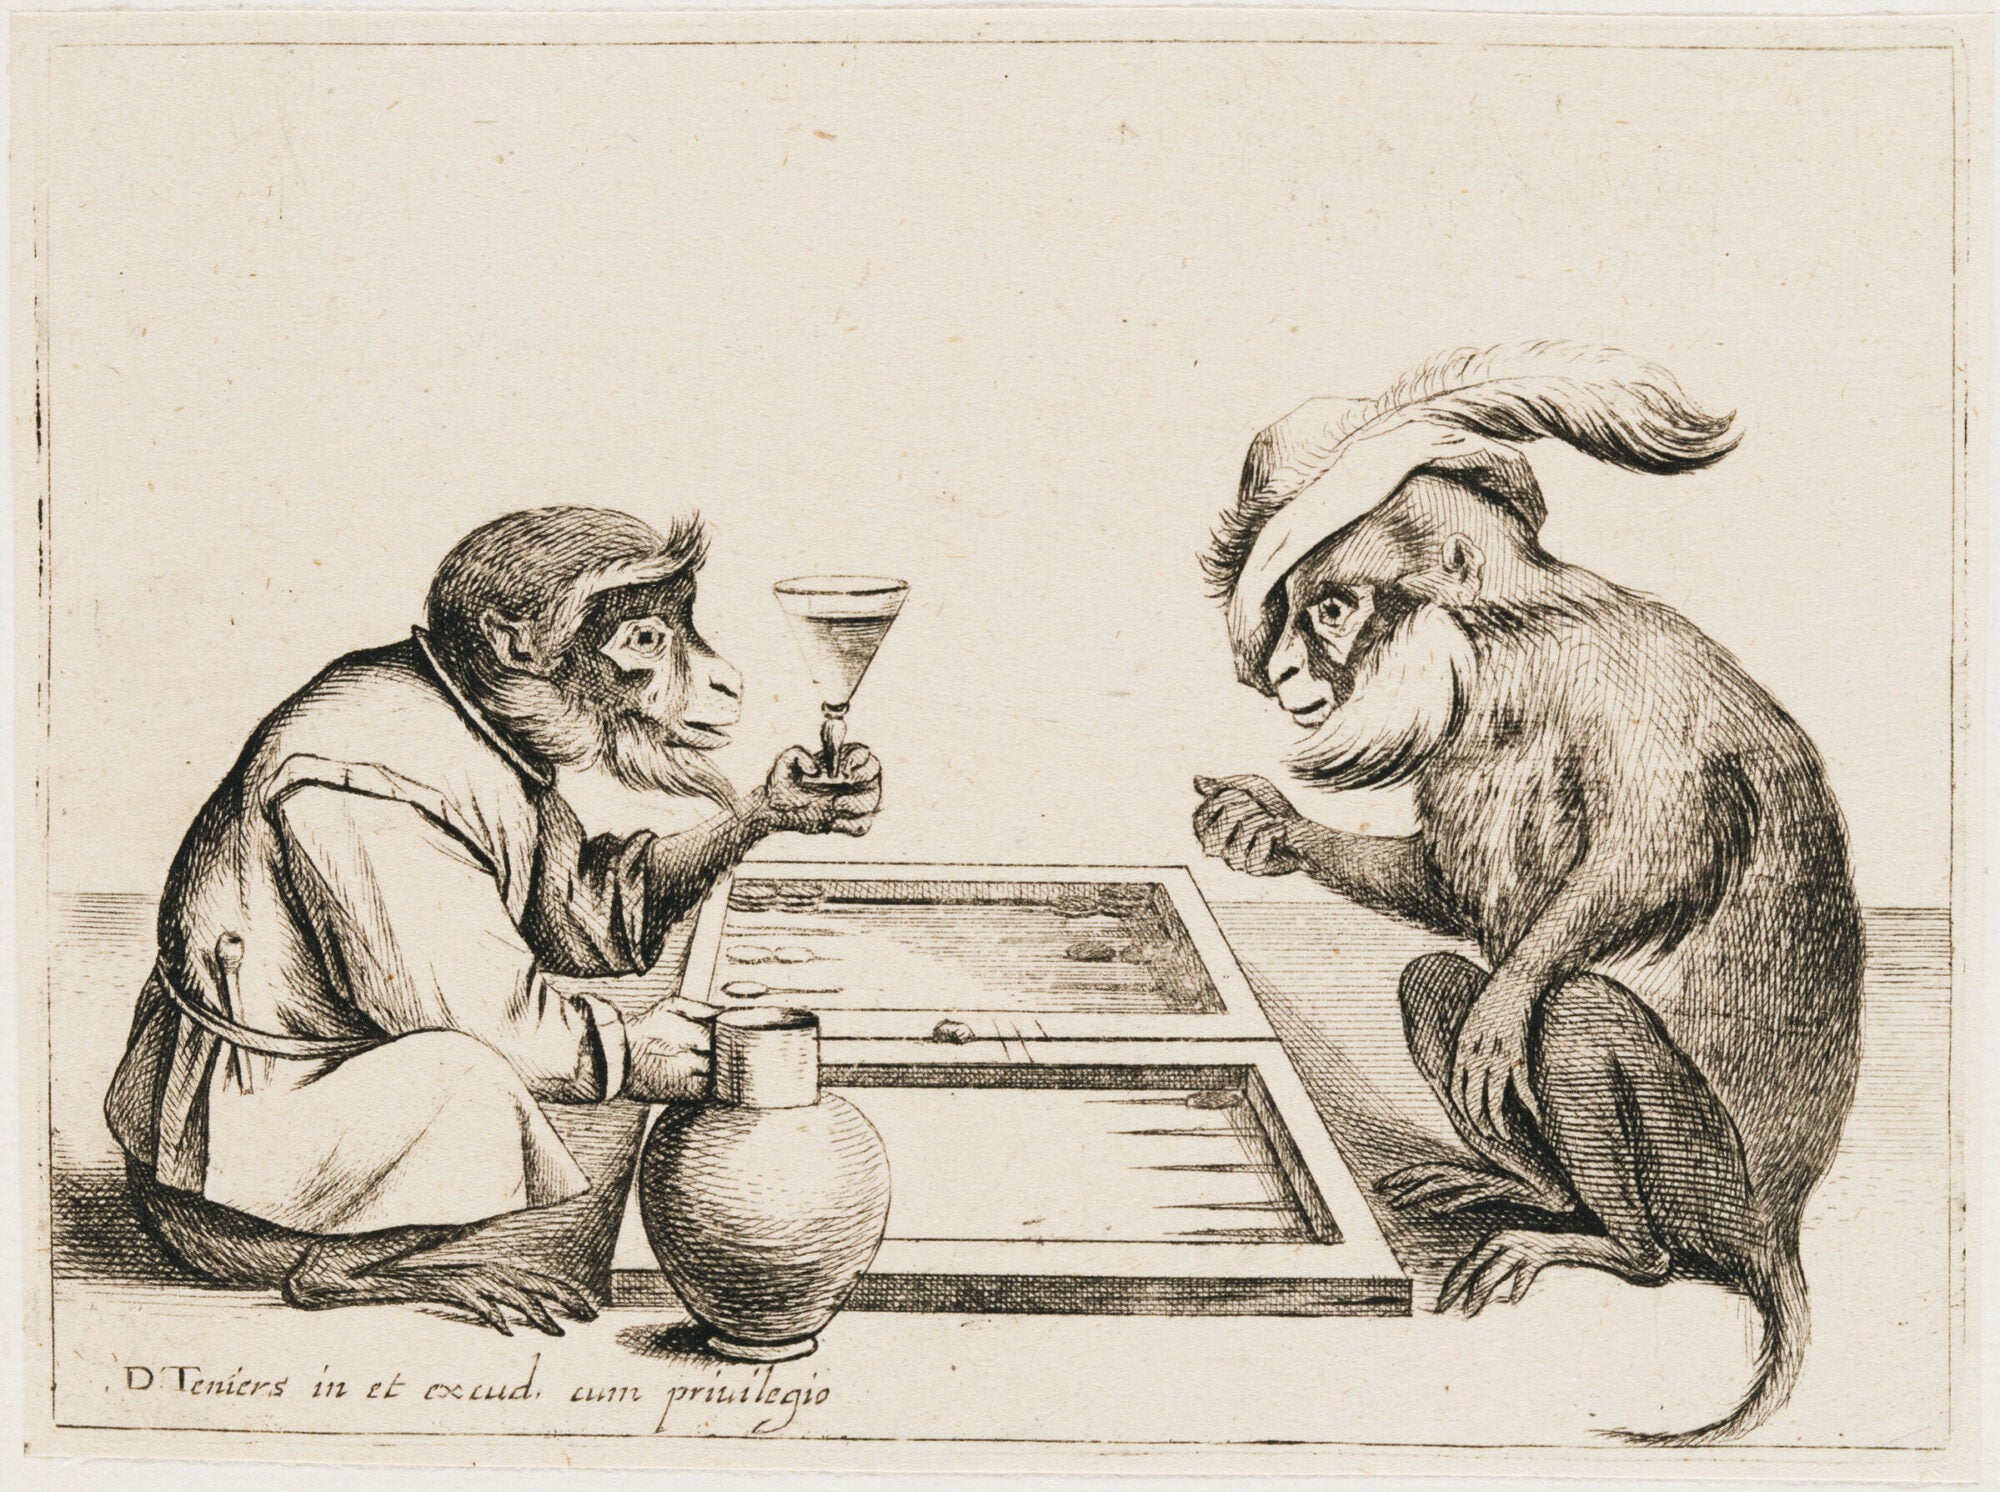 A print of two monkeys playing backgammon